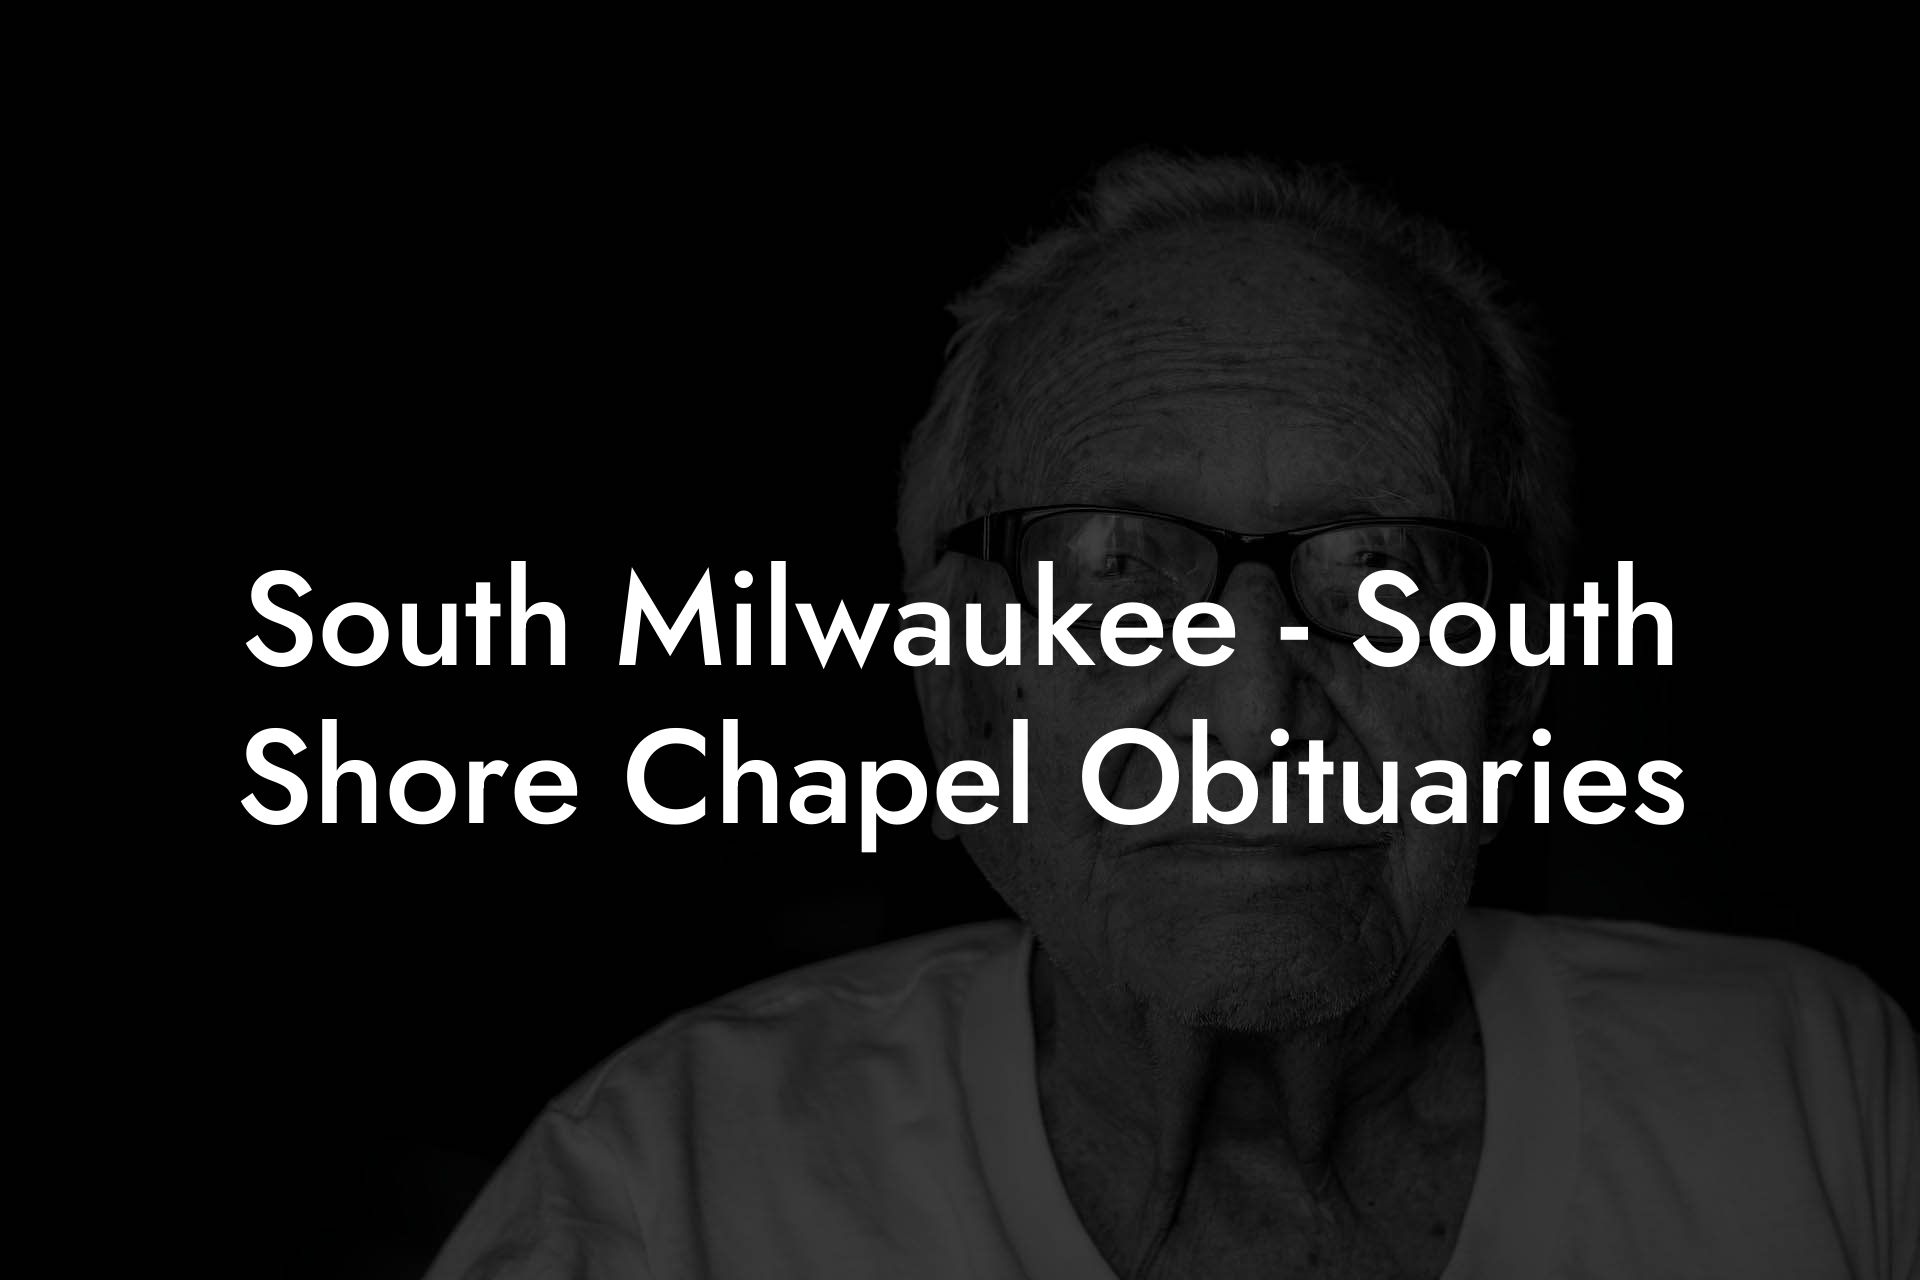 South Milwaukee - South Shore Chapel Obituaries